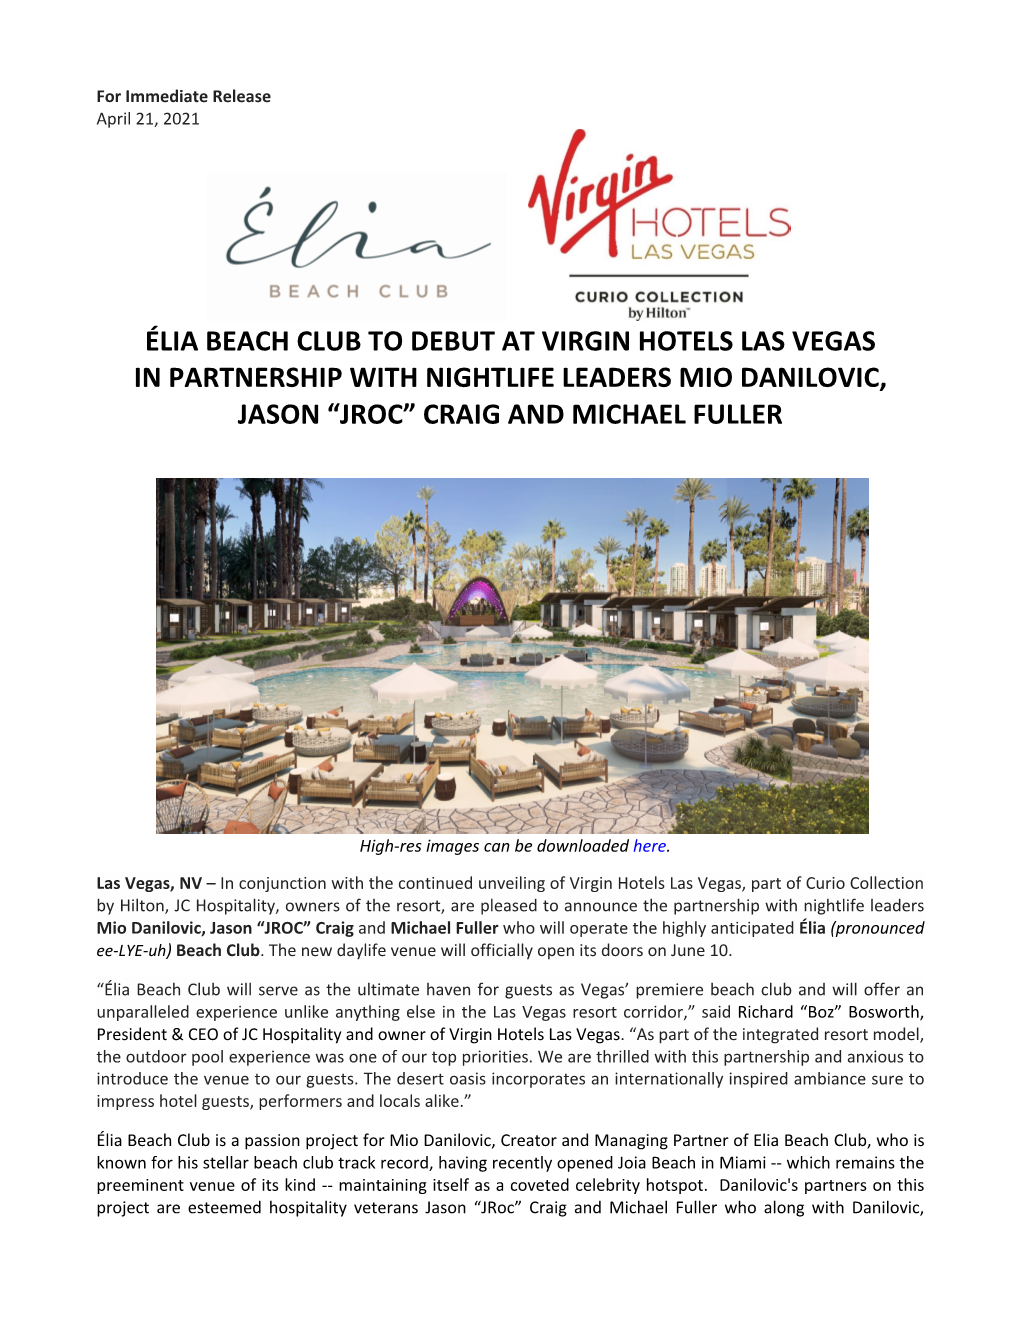 Élia Beach Club to Debut at Virgin Hotels Las Vegas in Partnership with Nightlife Leaders Mio Danilovic, Jason “Jroc” Craig and Michael Fuller